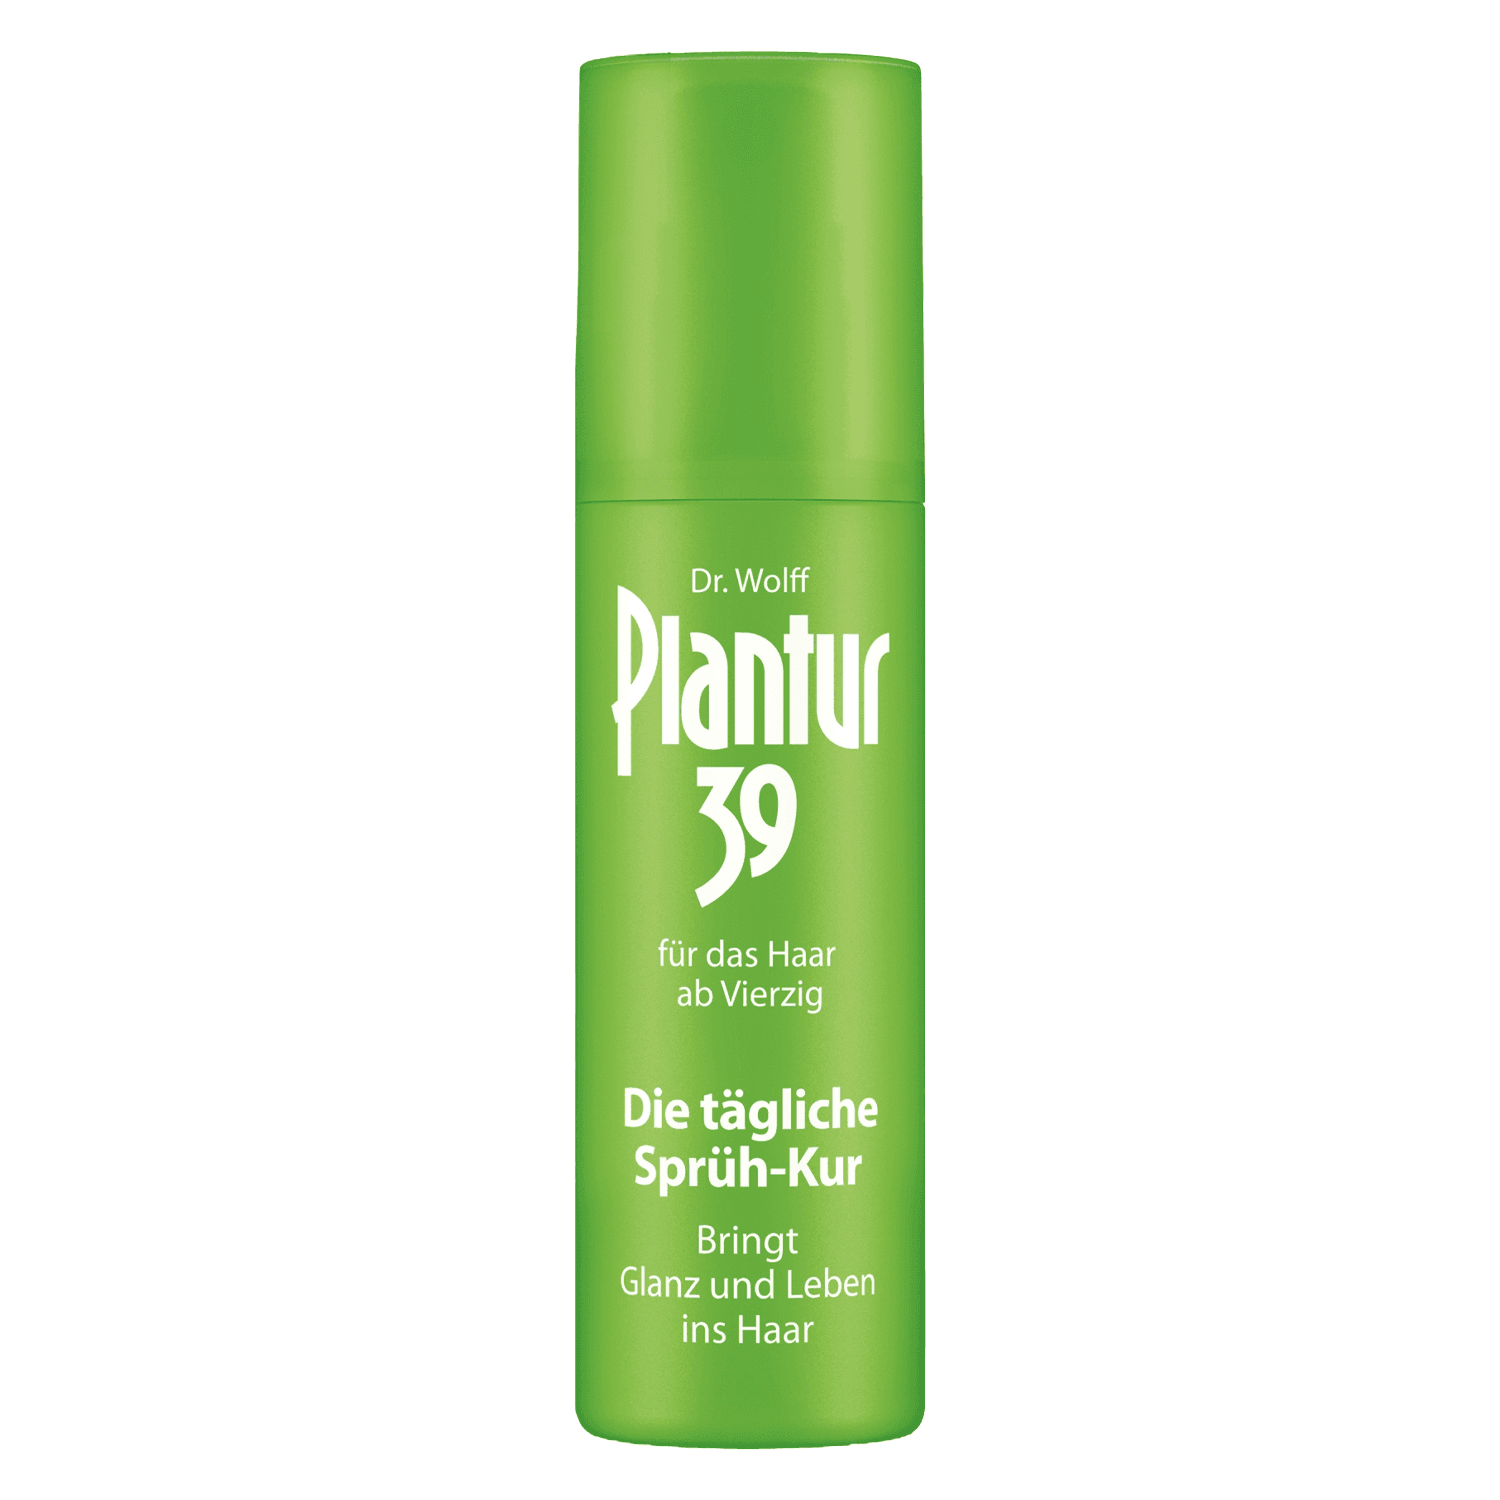 Plantur 39 - Spray Treatment